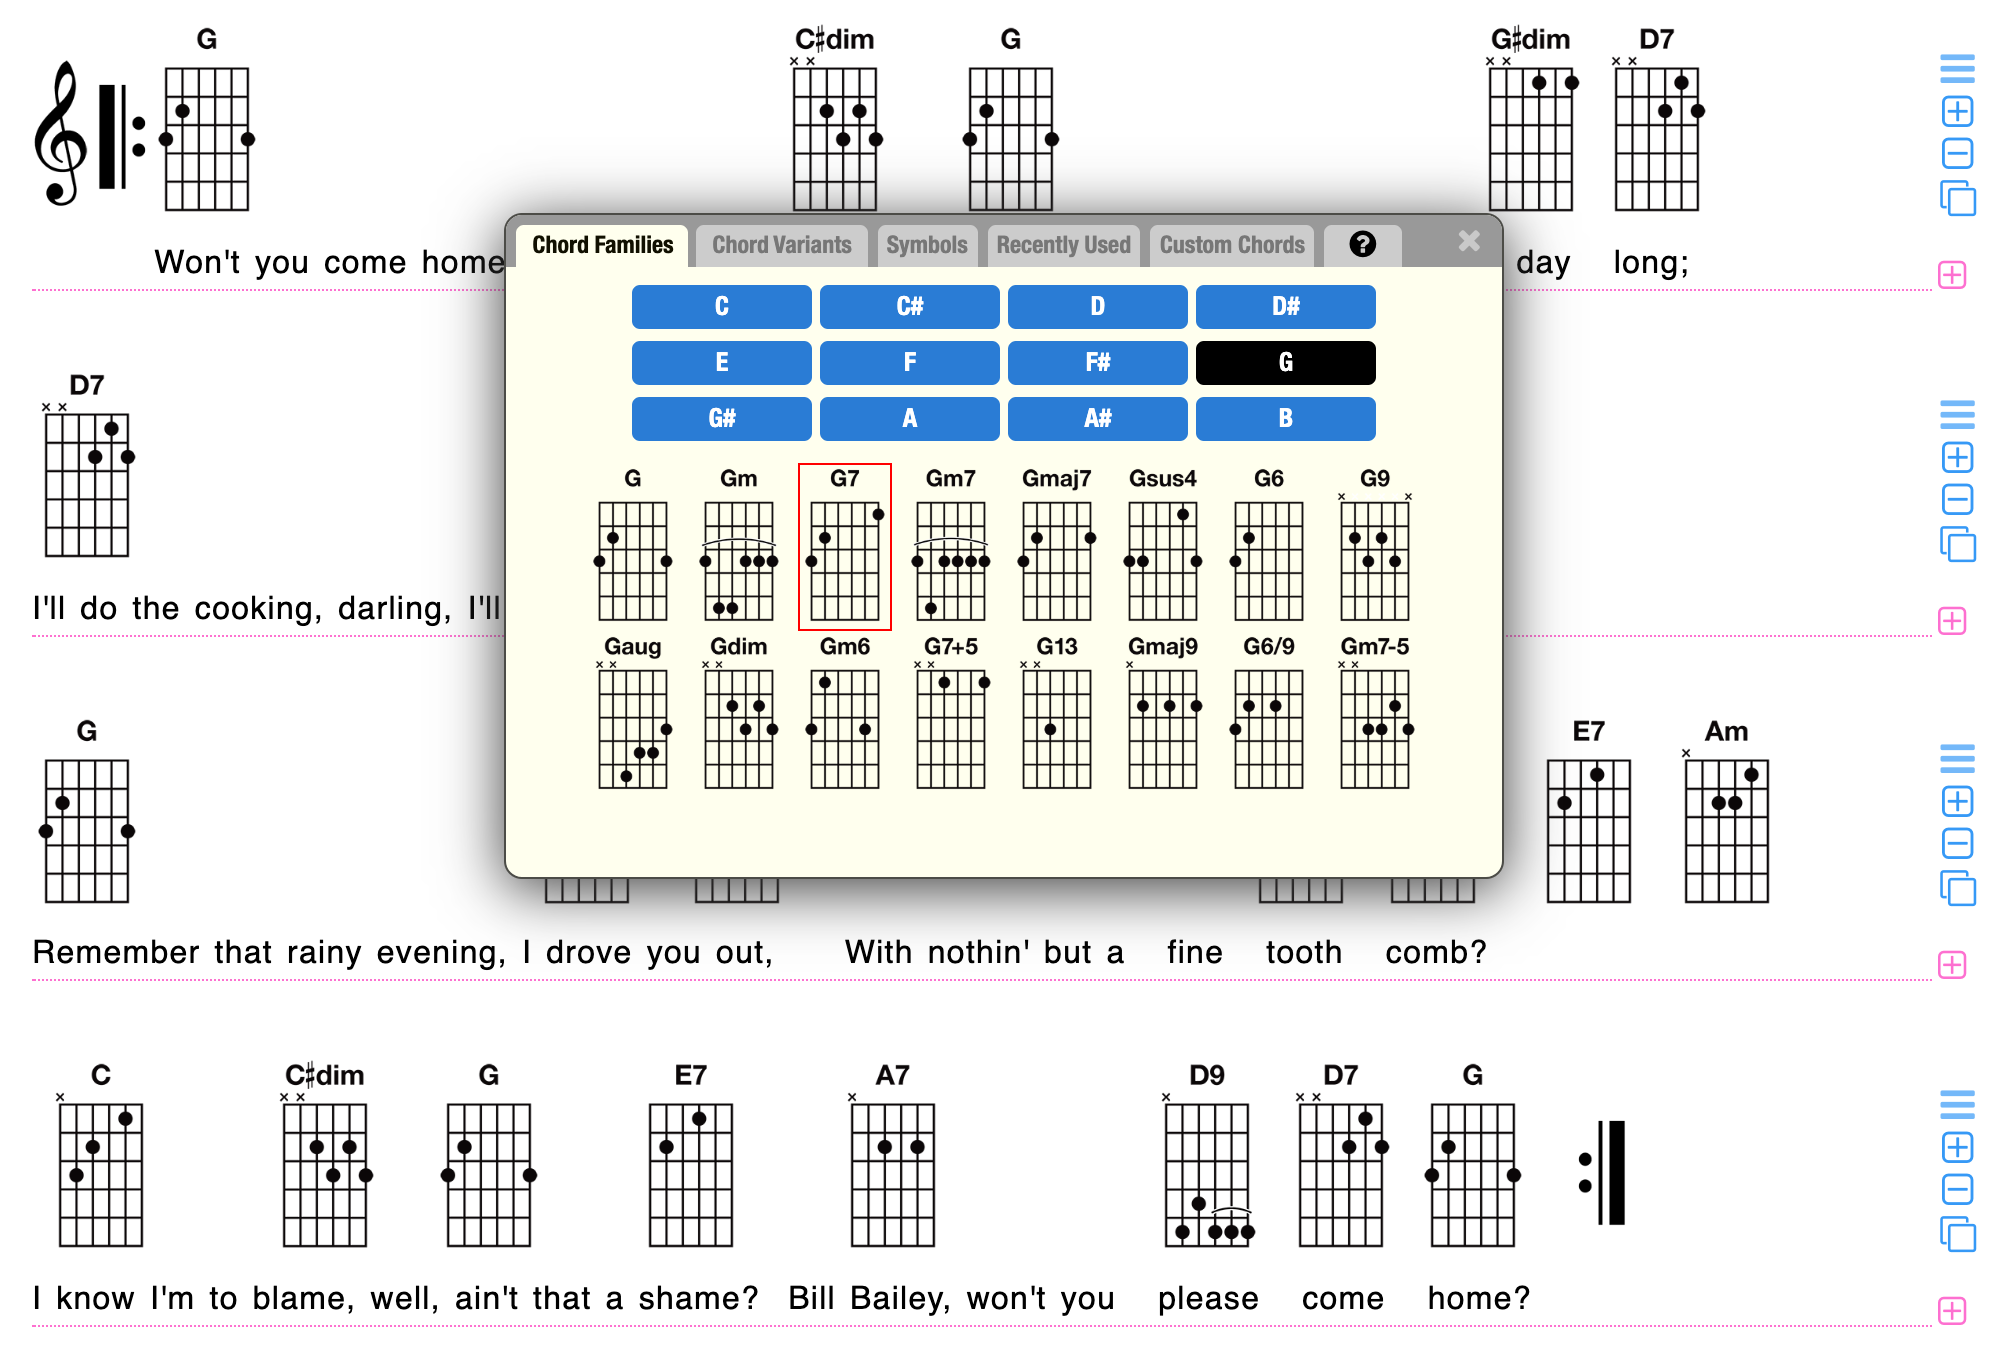 Chord Chart Software